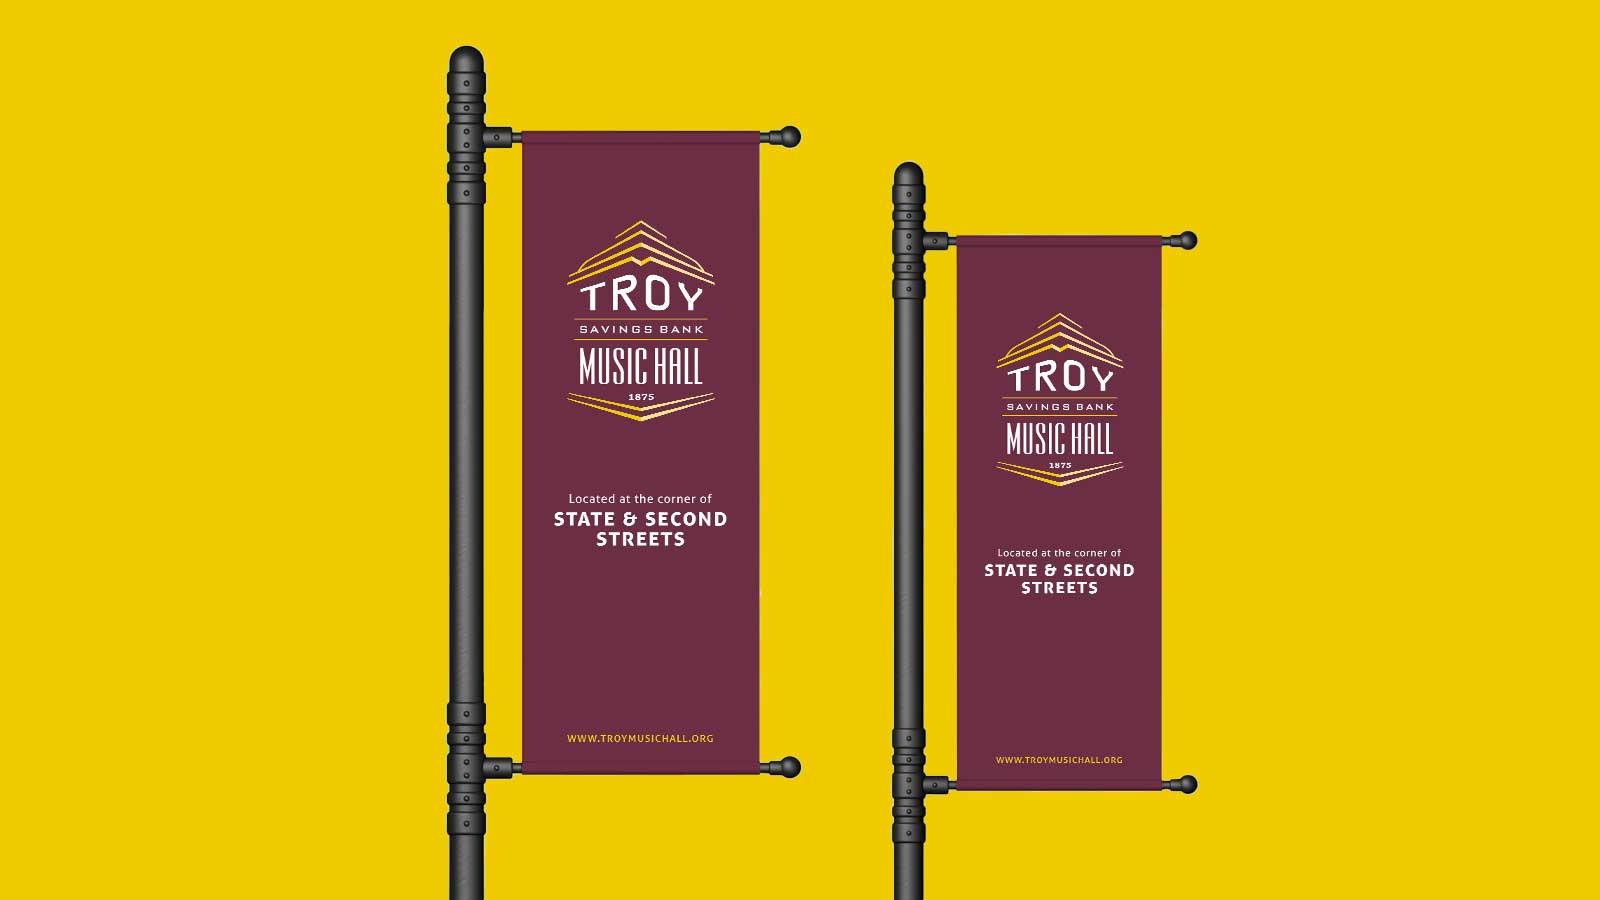 Troy Savings Bank Music Hall | Outdoor banners